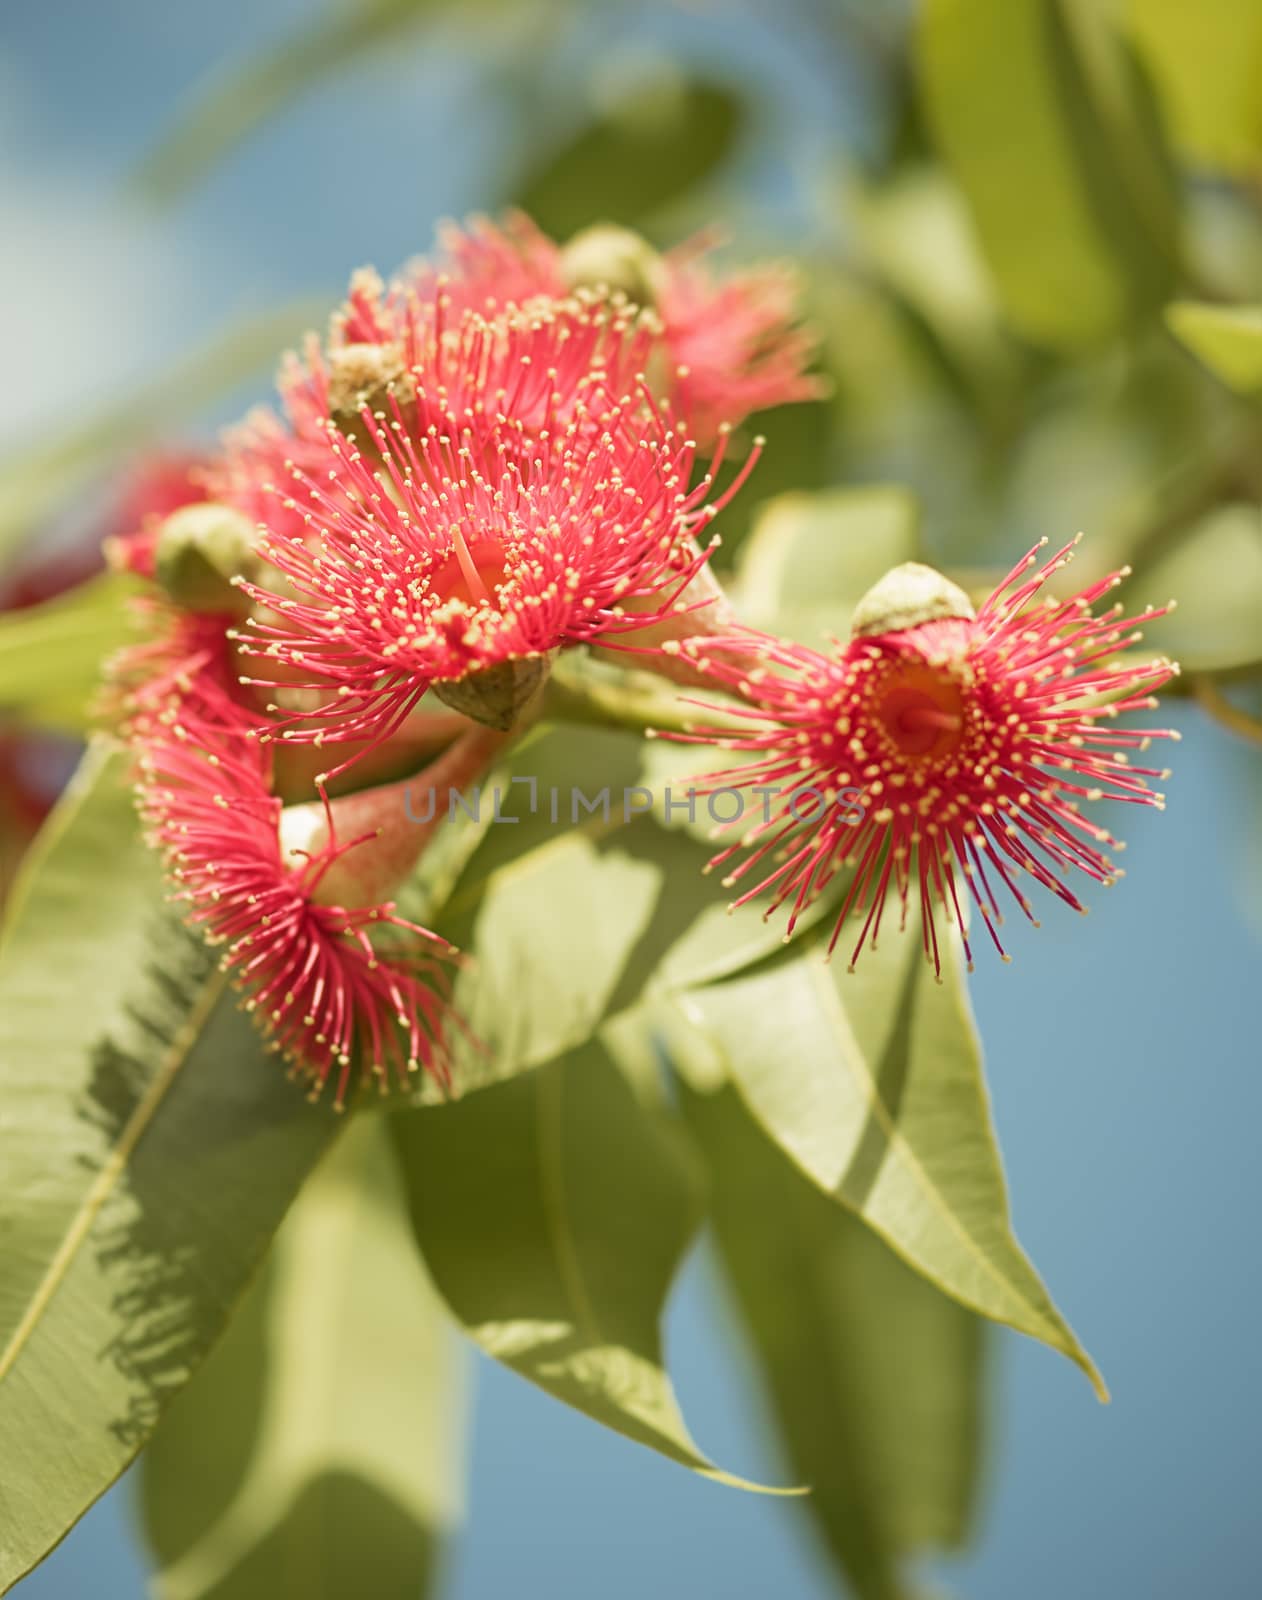 Australian native flowering gum tree by sherj